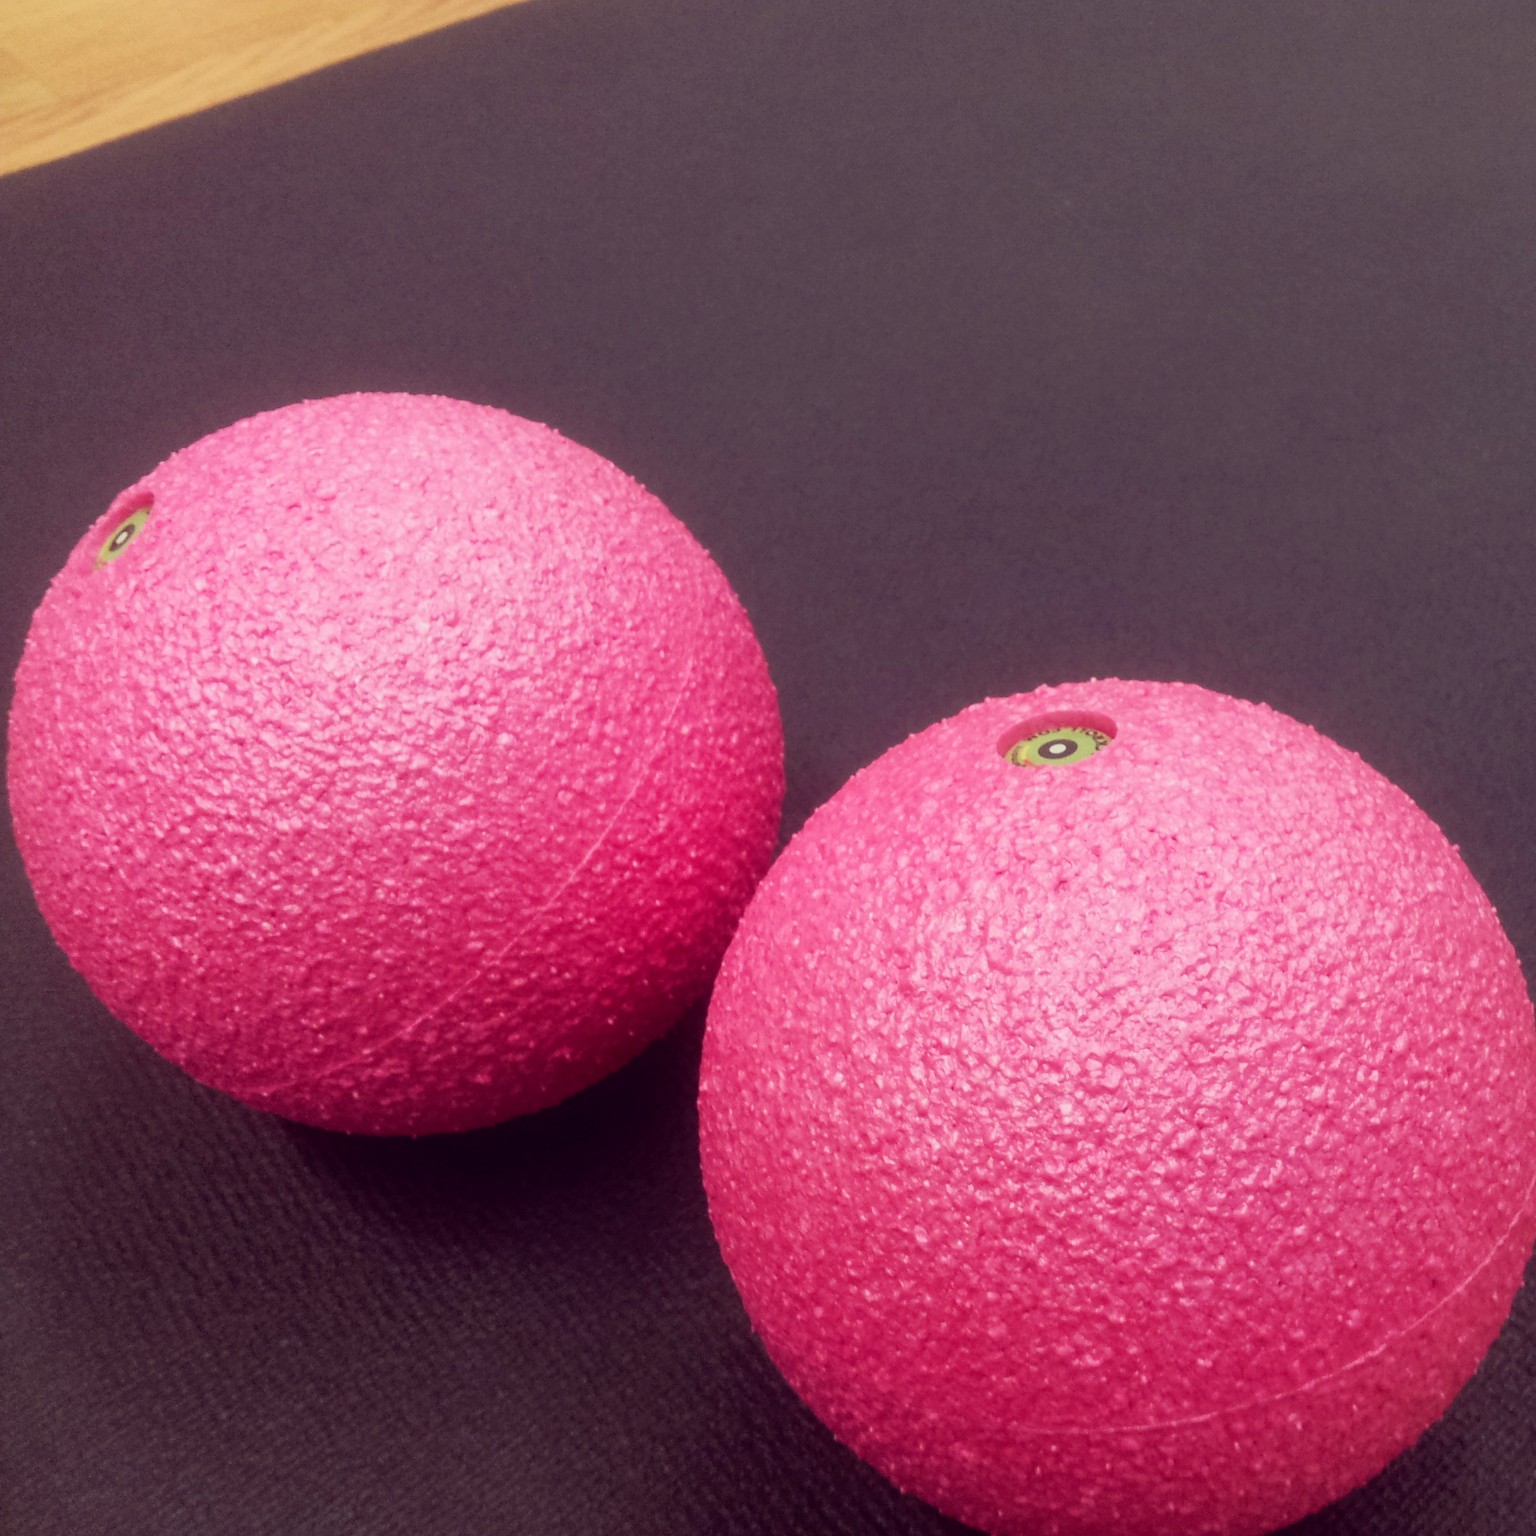 Pinkballs